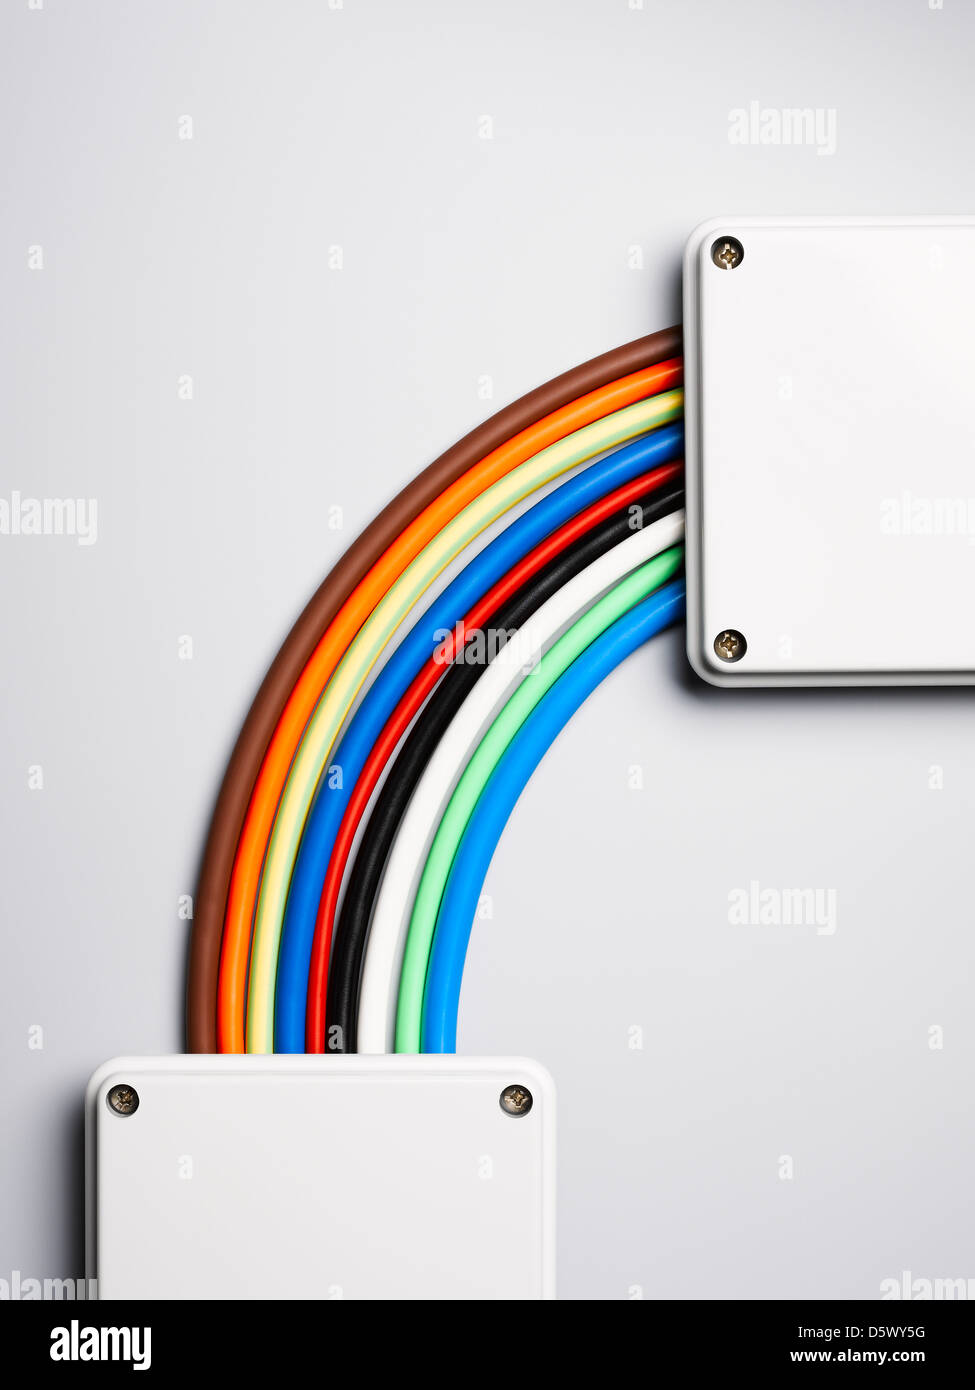 Corde colorate in forma arcobaleno Foto Stock